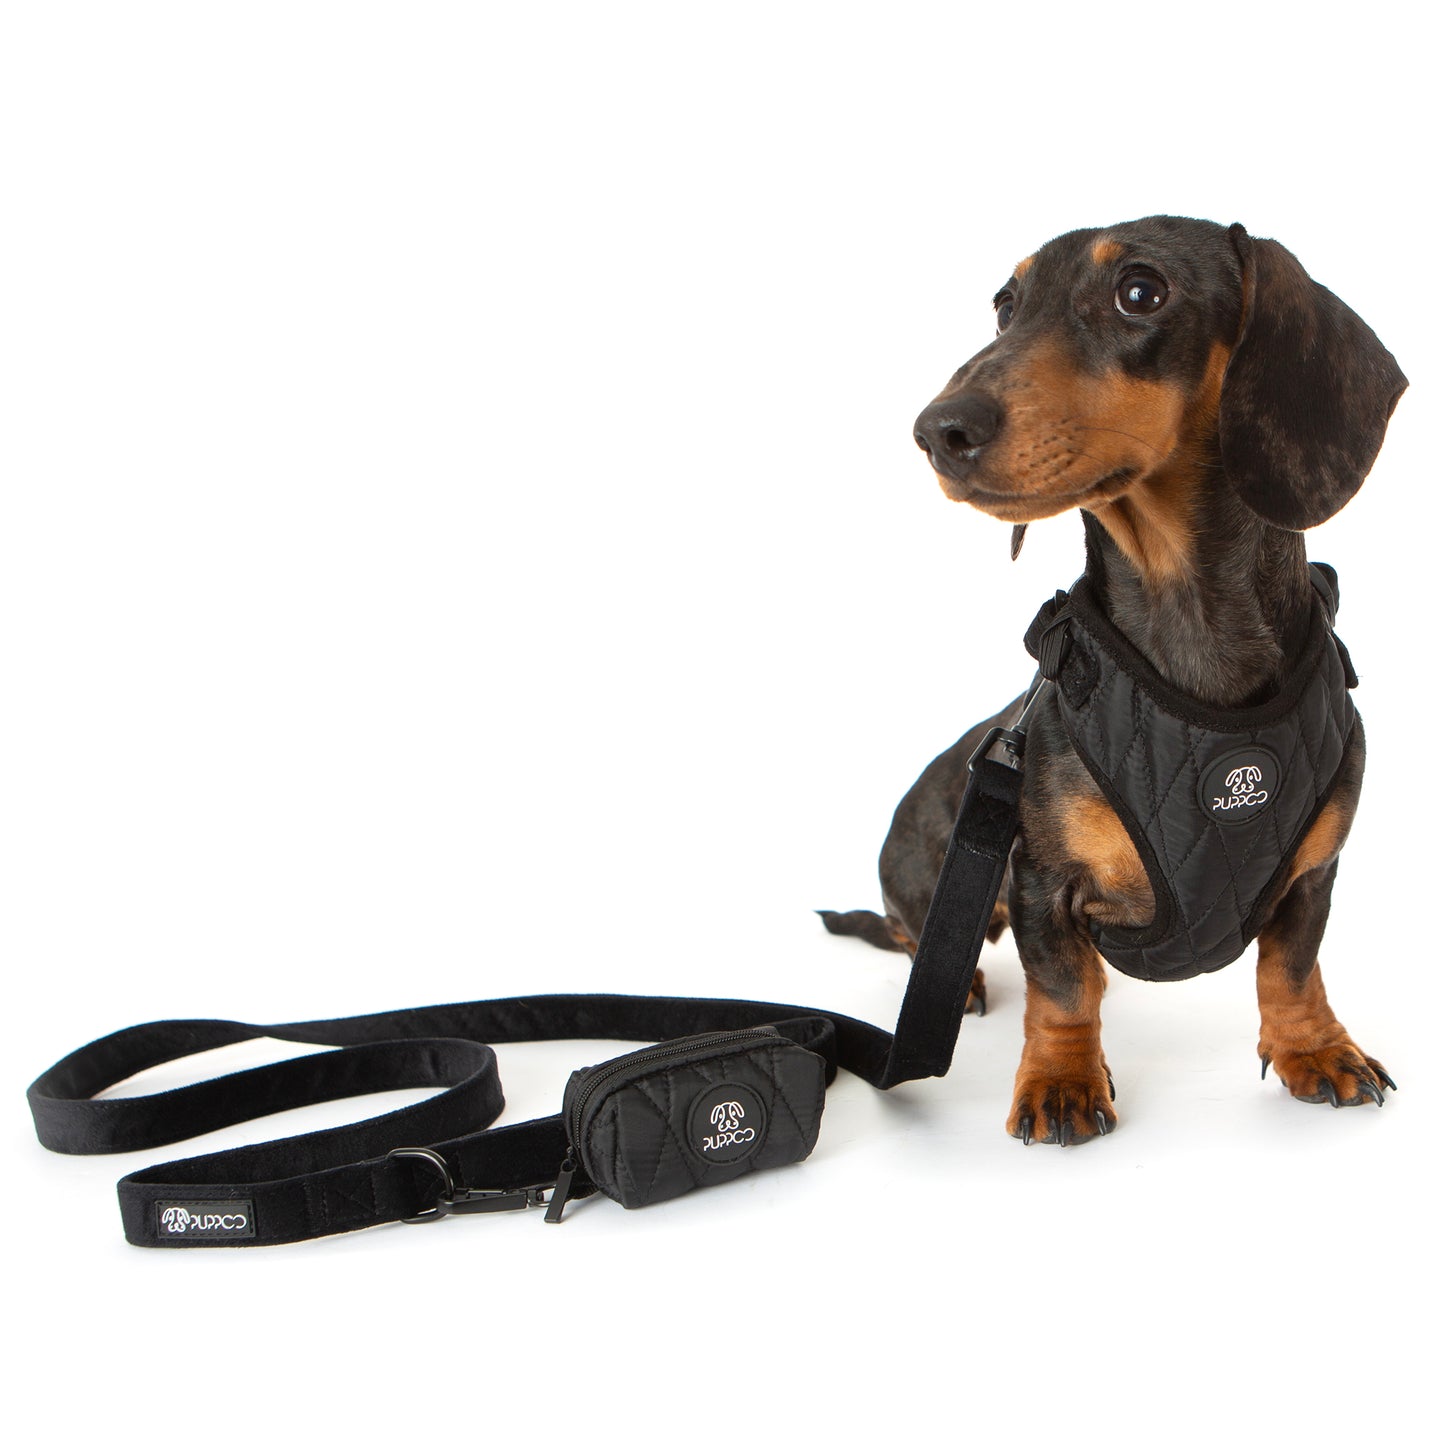 Pufferd Vest Dog Harness on mini dachshund 